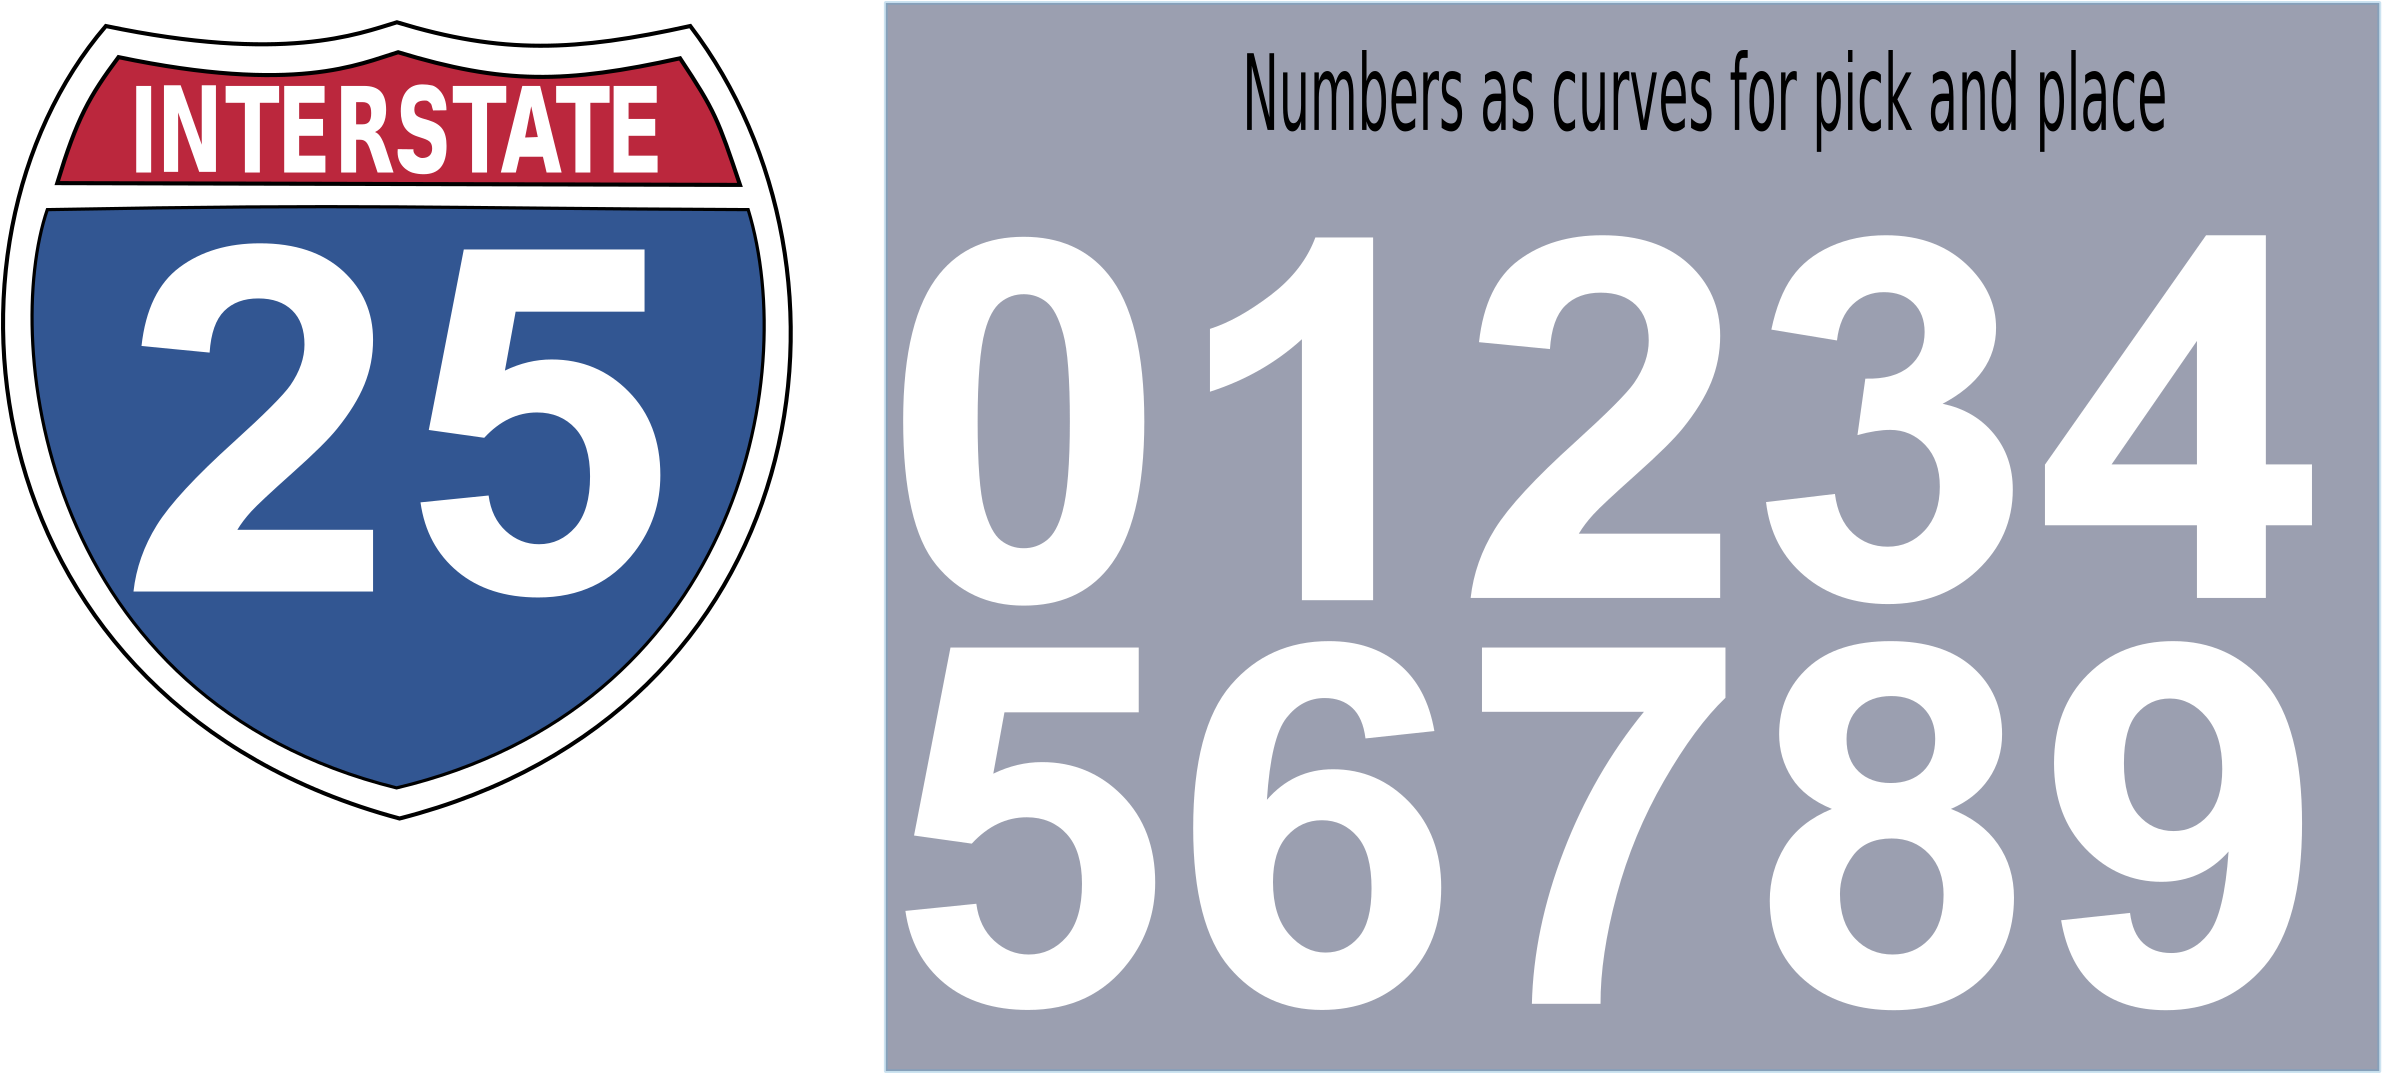 Big Image - Interstate Highway Signs (2400x1072)